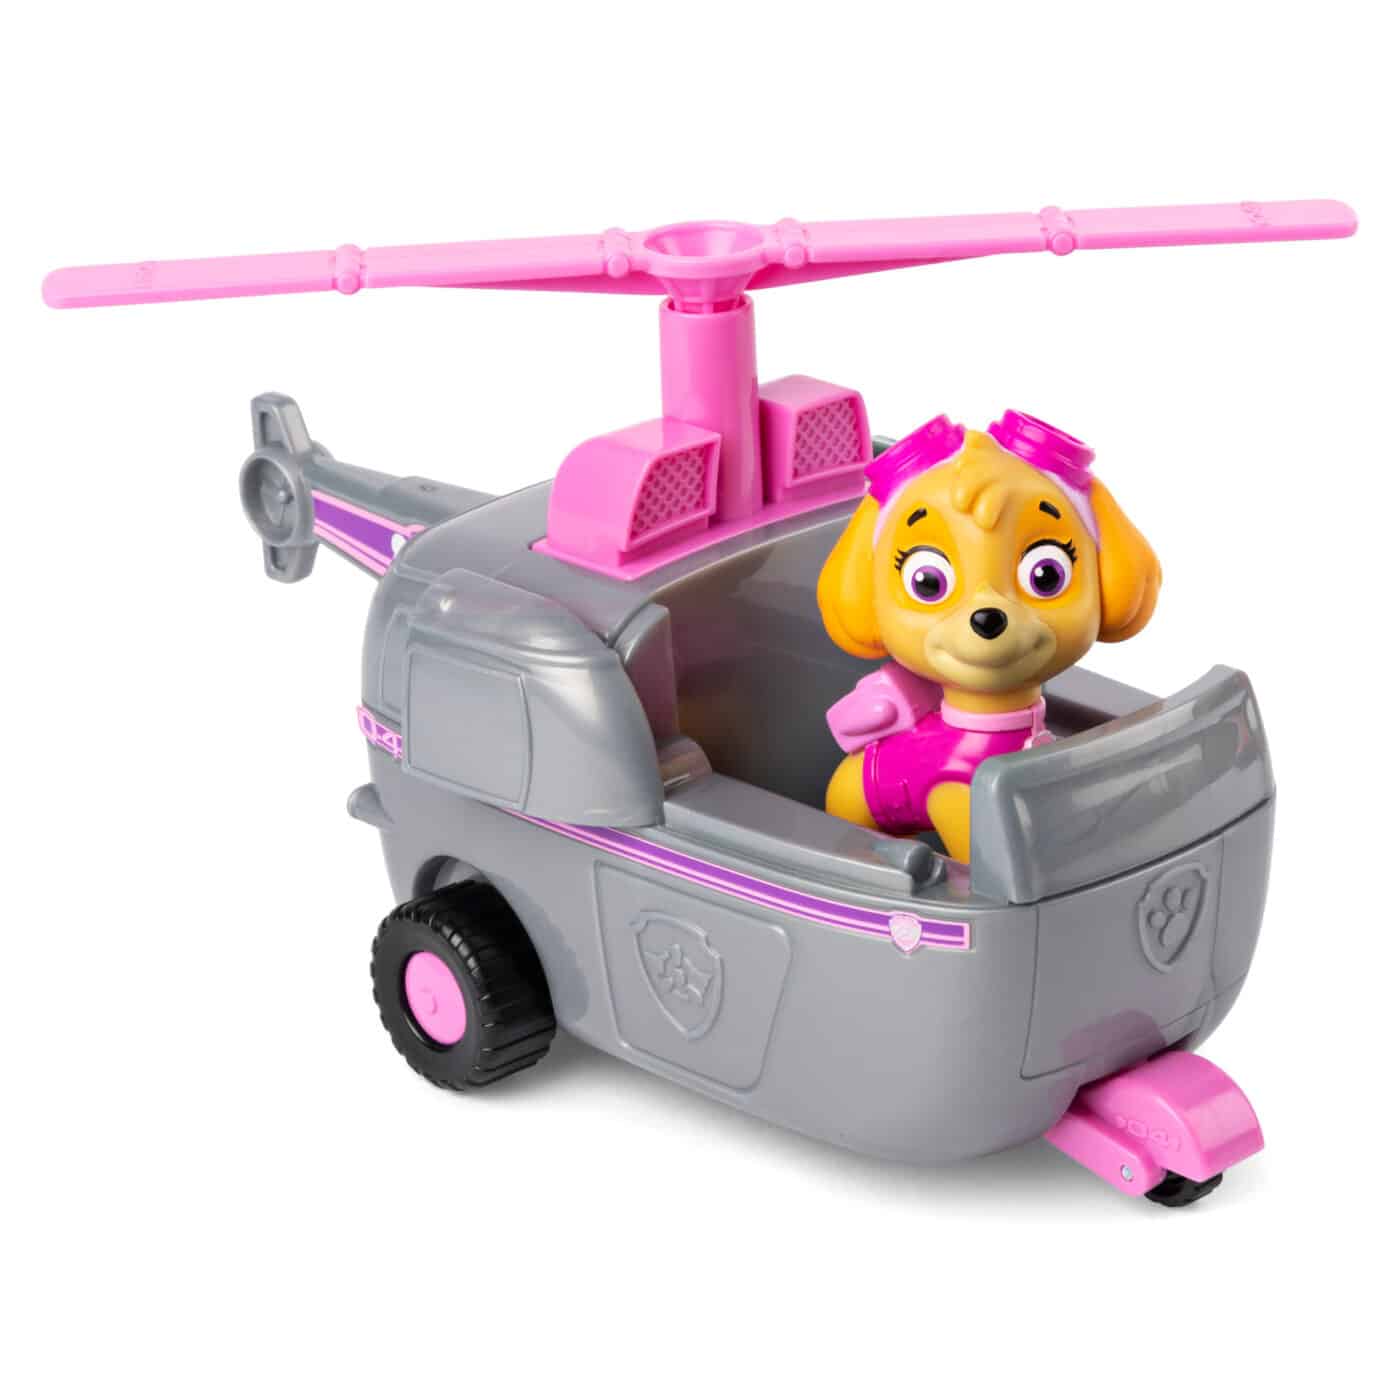 Nickelodeon - Paw Patrol Vehicle - Skye Helicopter2